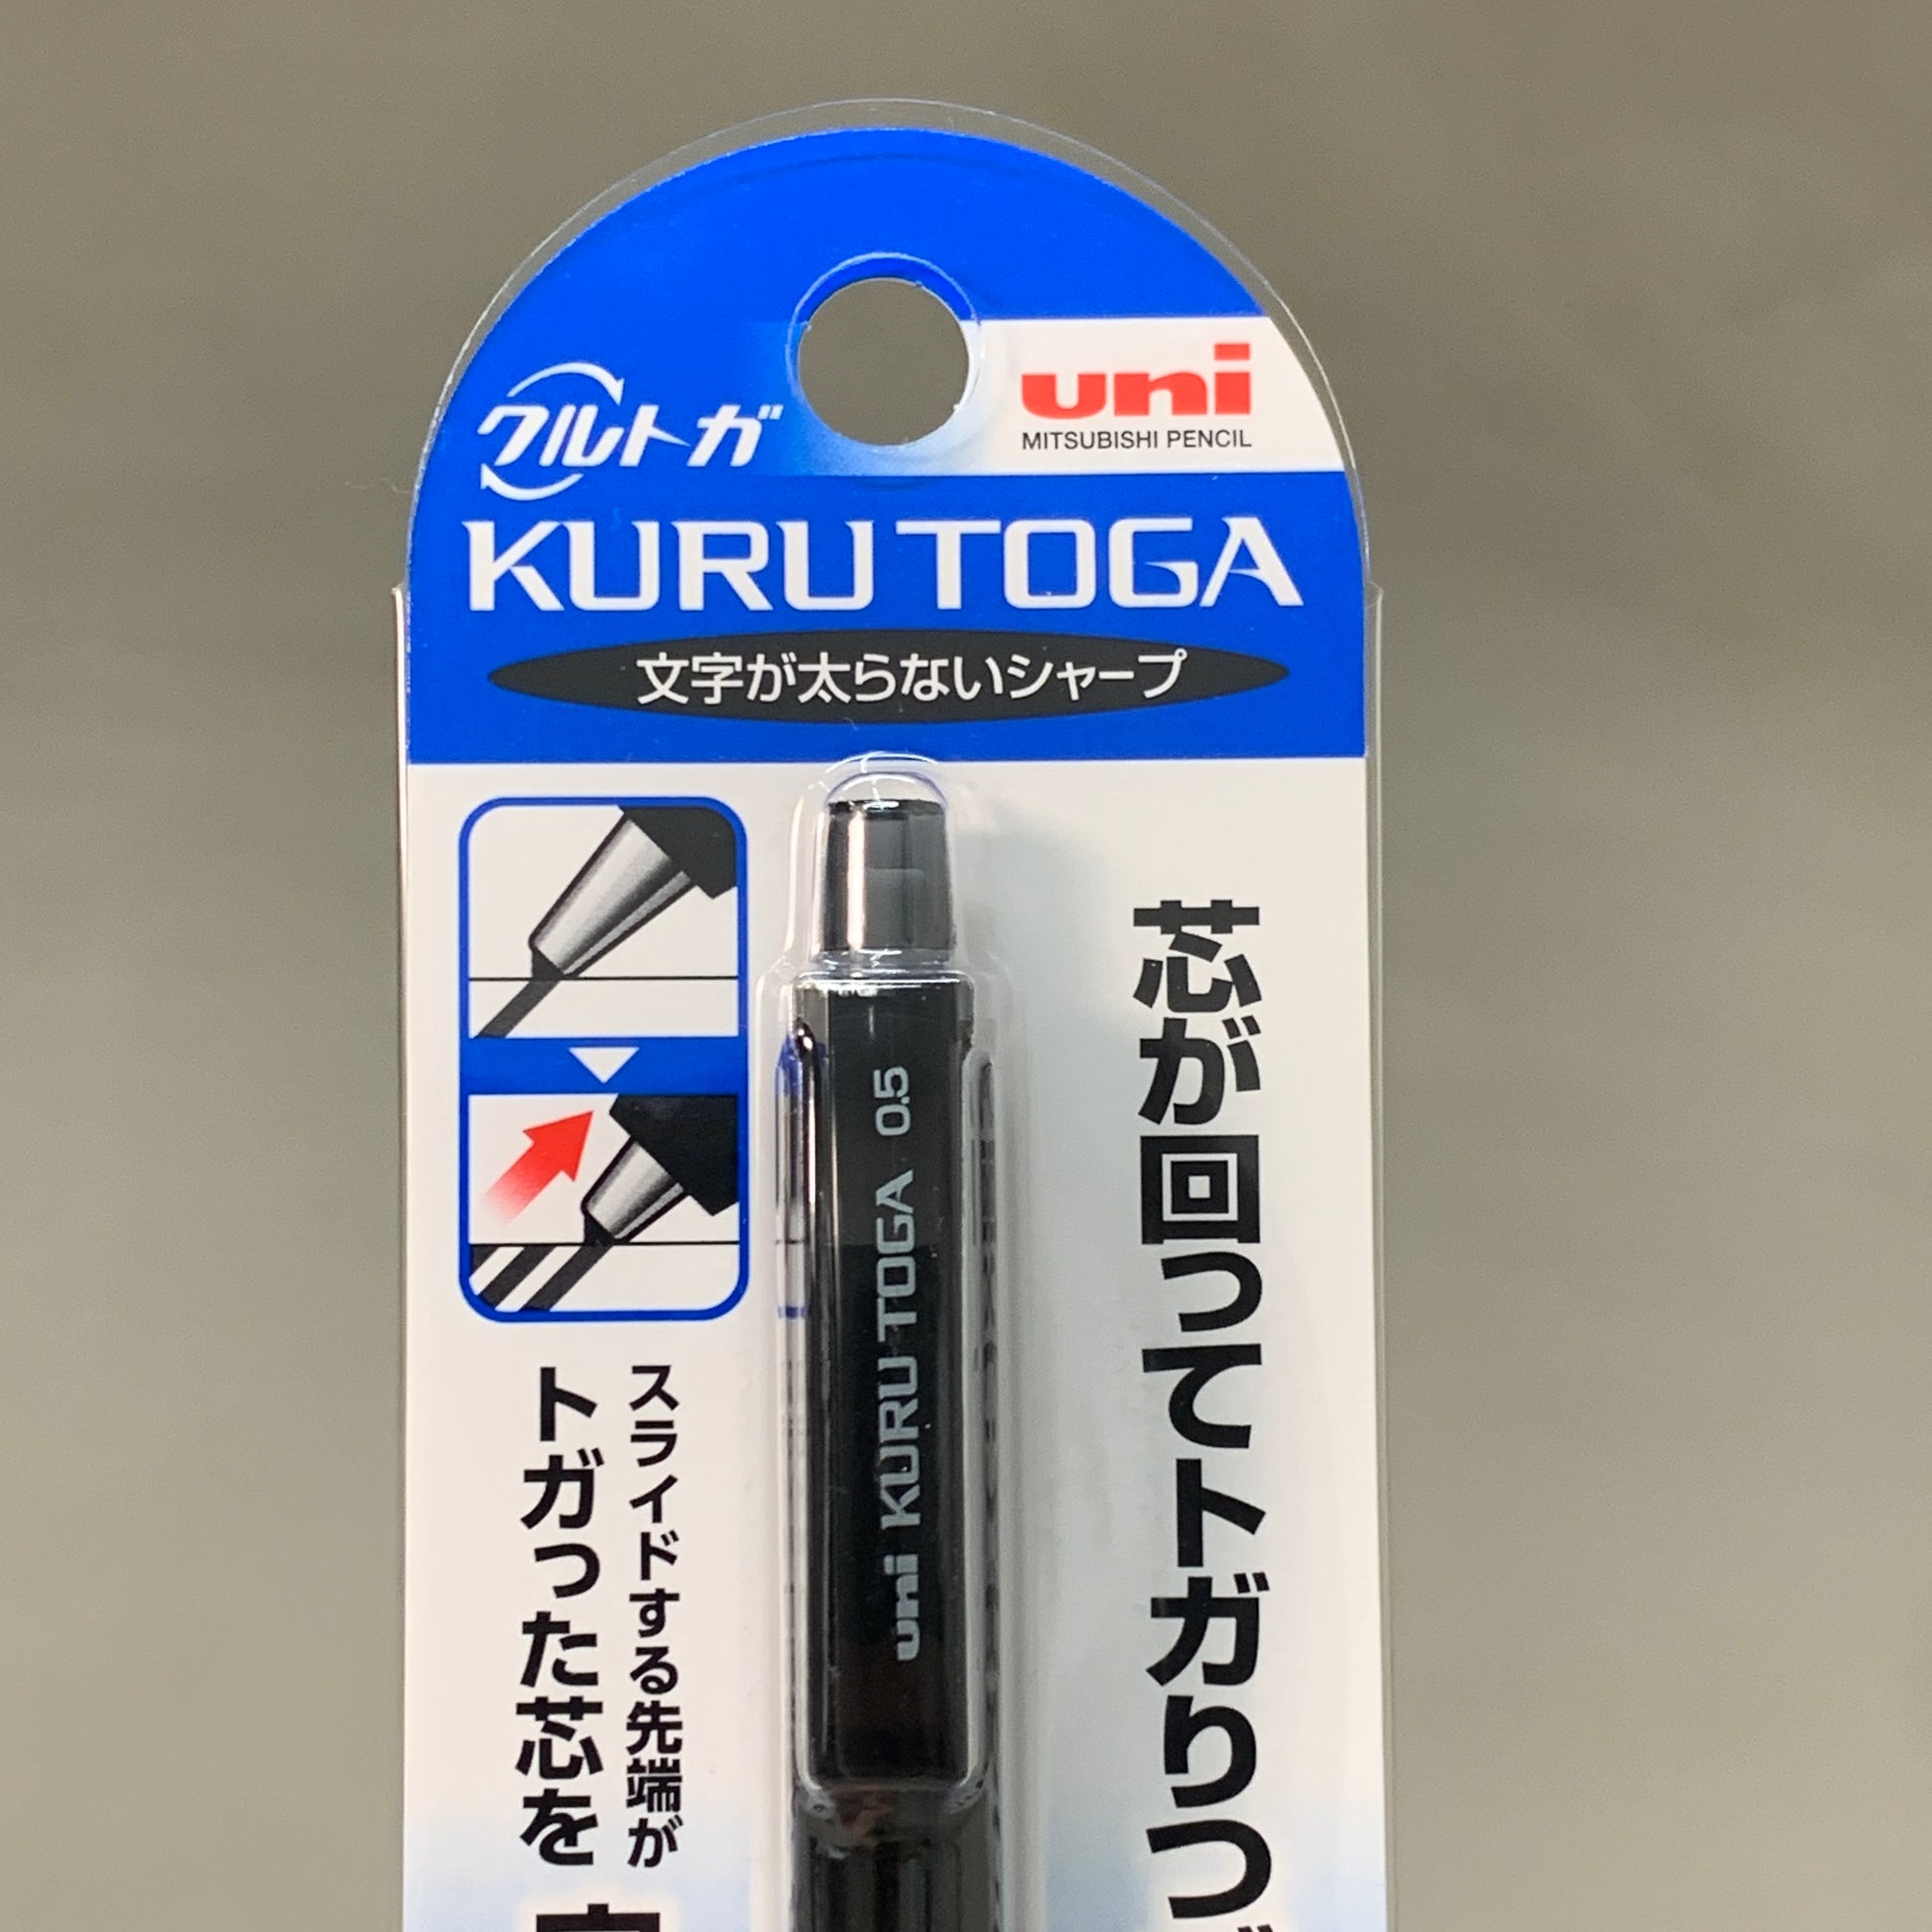 Uni M5-452 Kuru Toga Mechanical Pencil,Pipe Slide 0.5 mm Blue